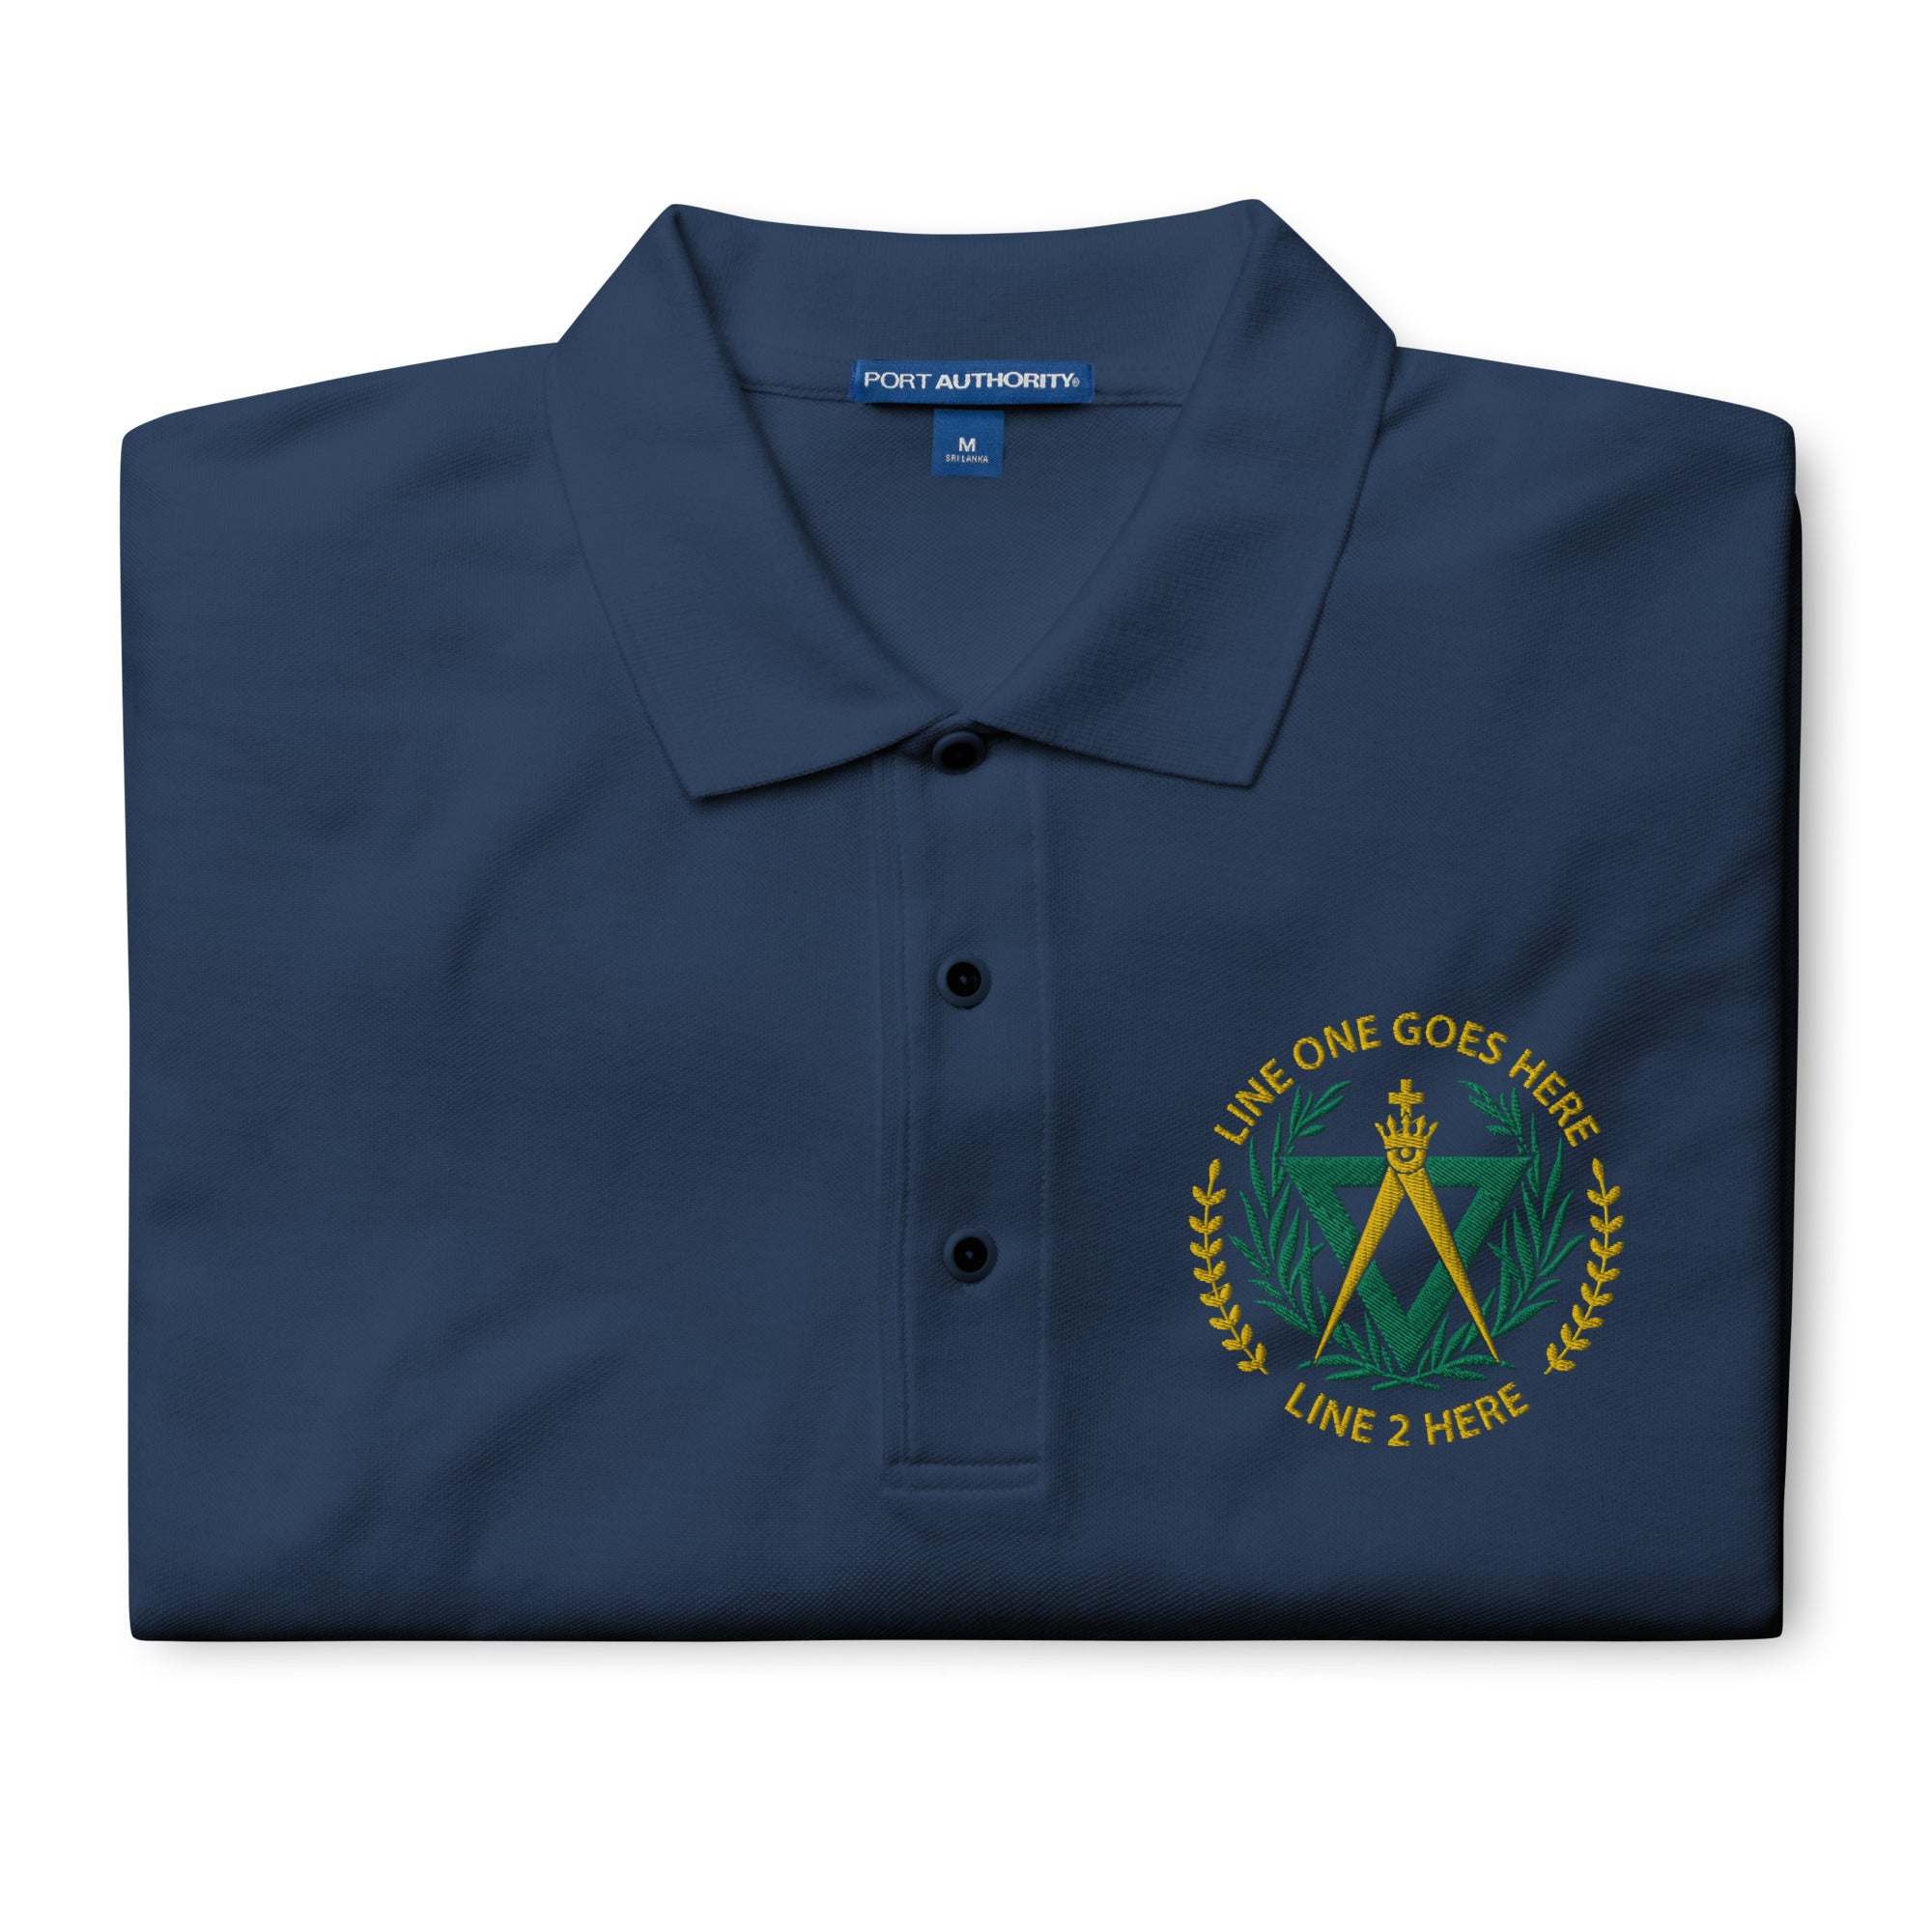 Allied Masonic Degrees Polo Shirts